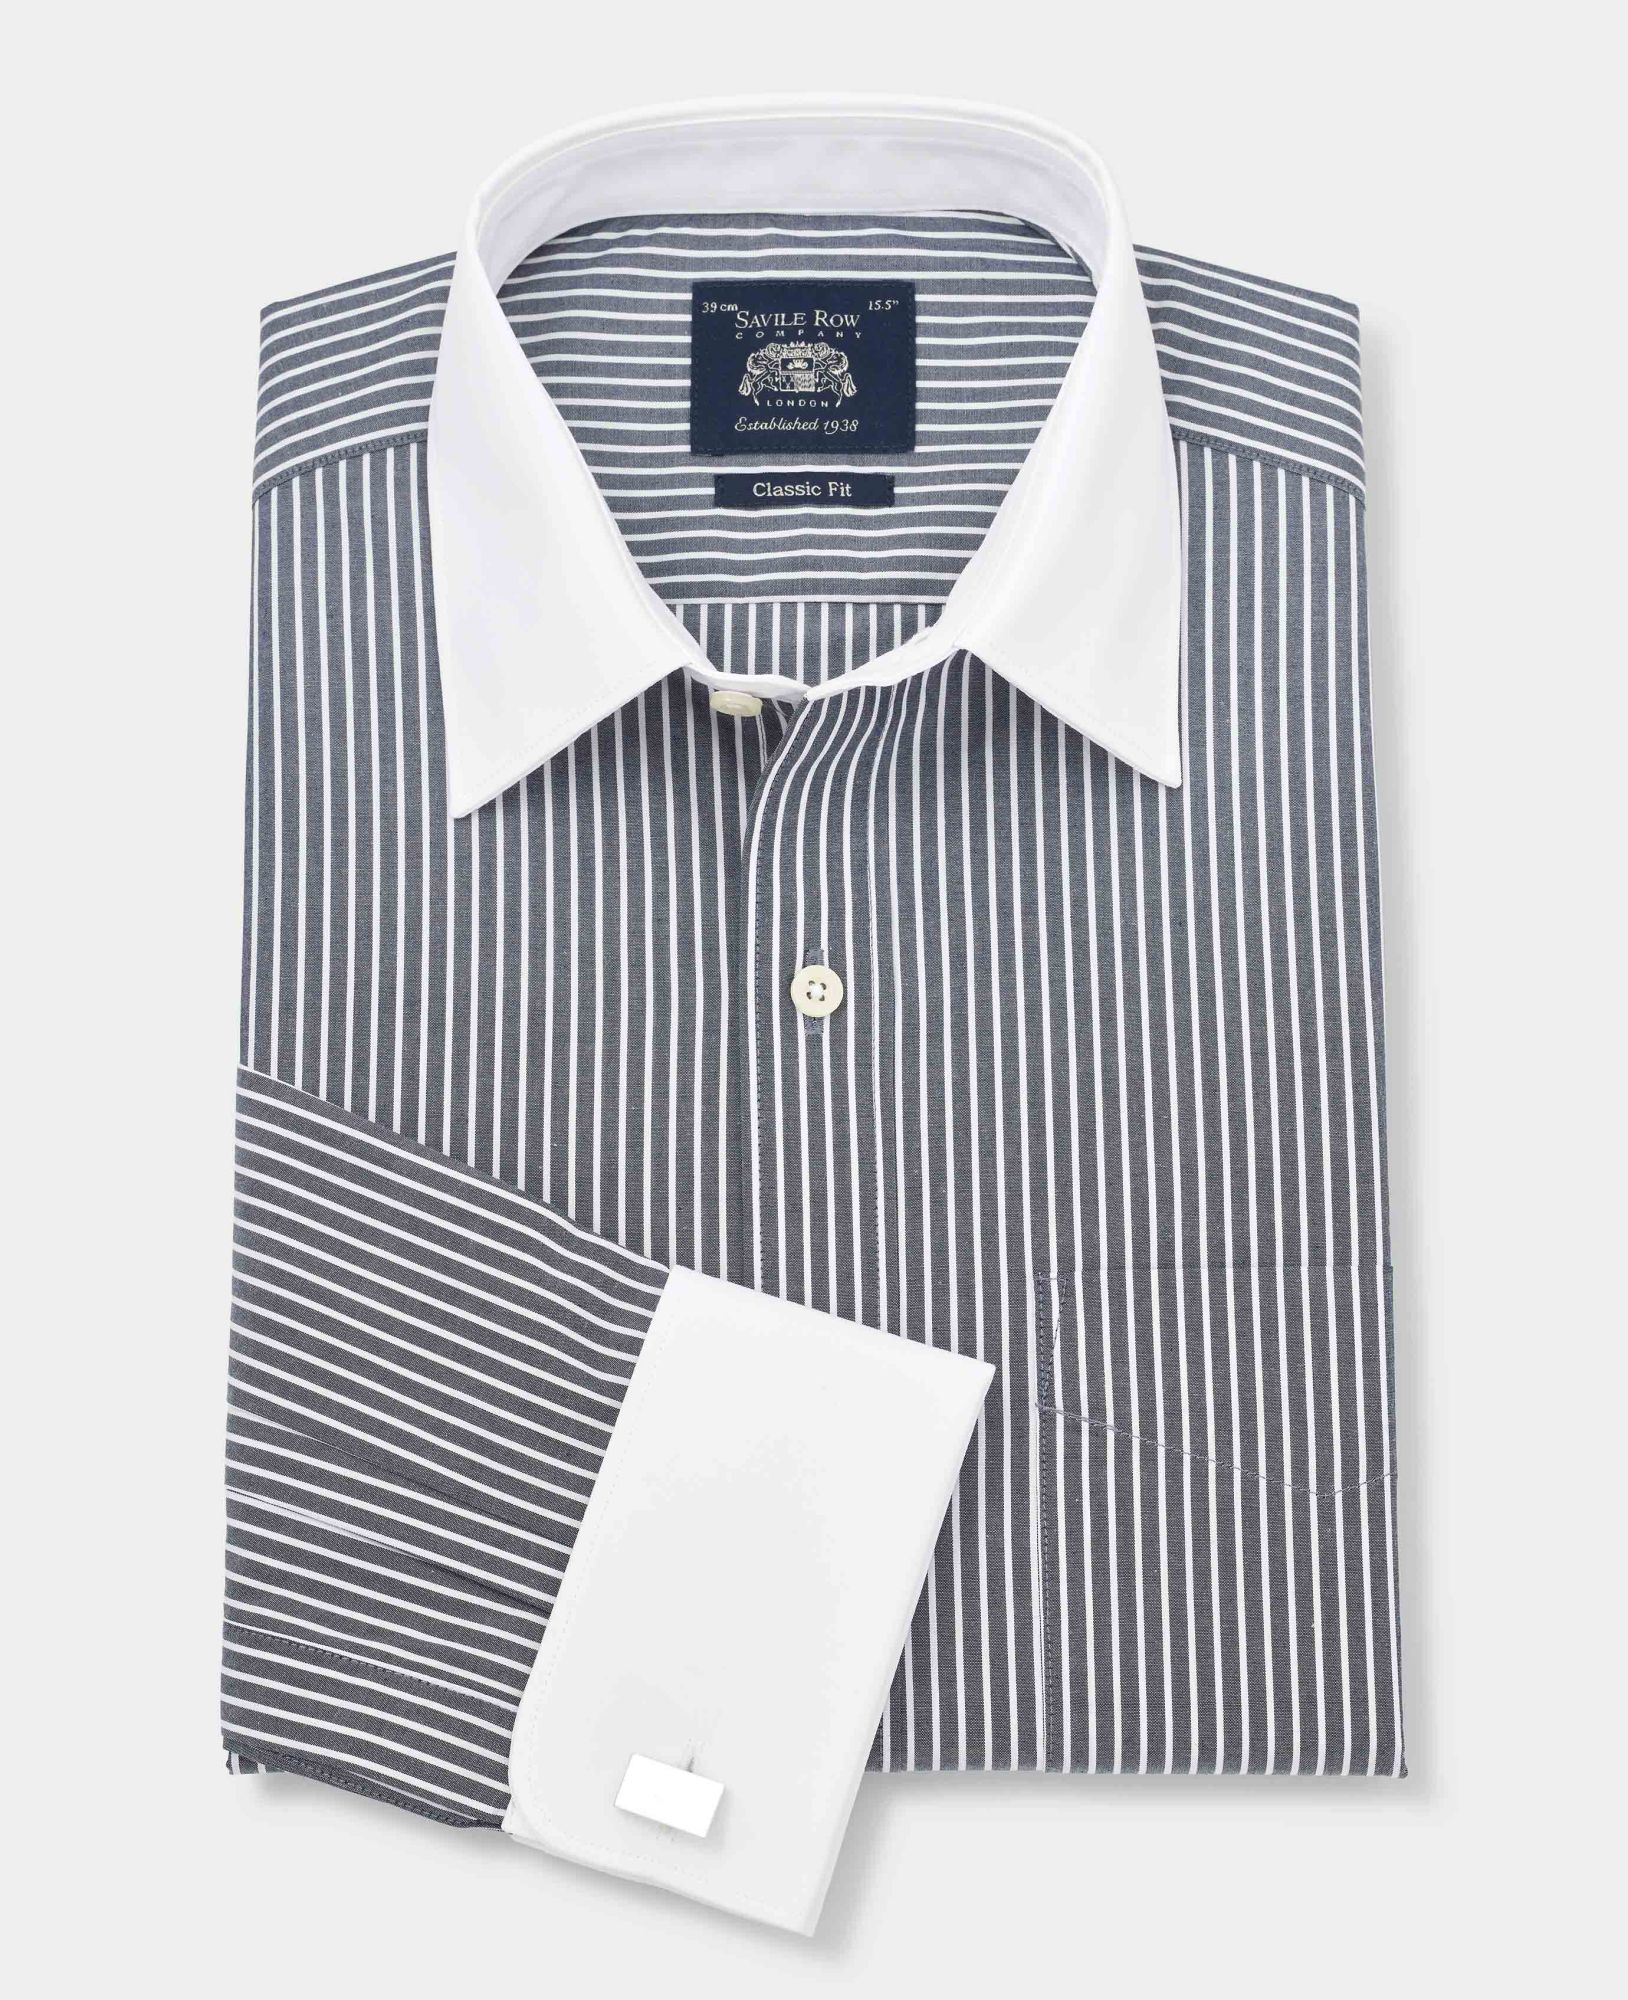 Black White Stripe Classic Fit Shirt With White Collar & Cuffs - Double Cuff 16 1/2